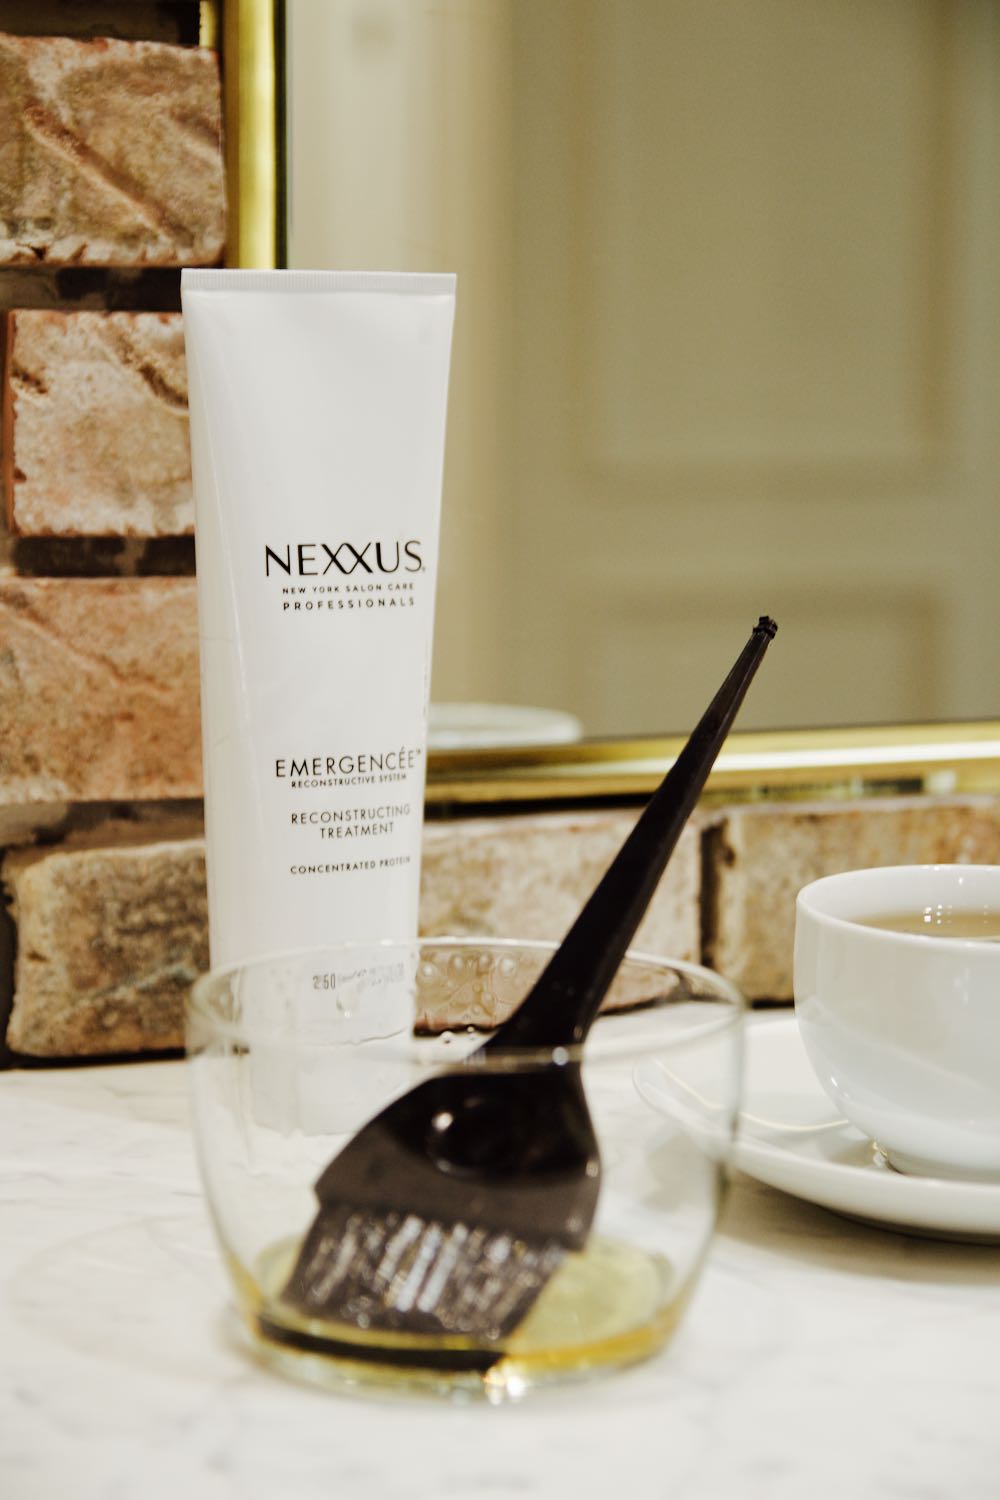 Nexxus New York Emergencee Treatment for damaged hair